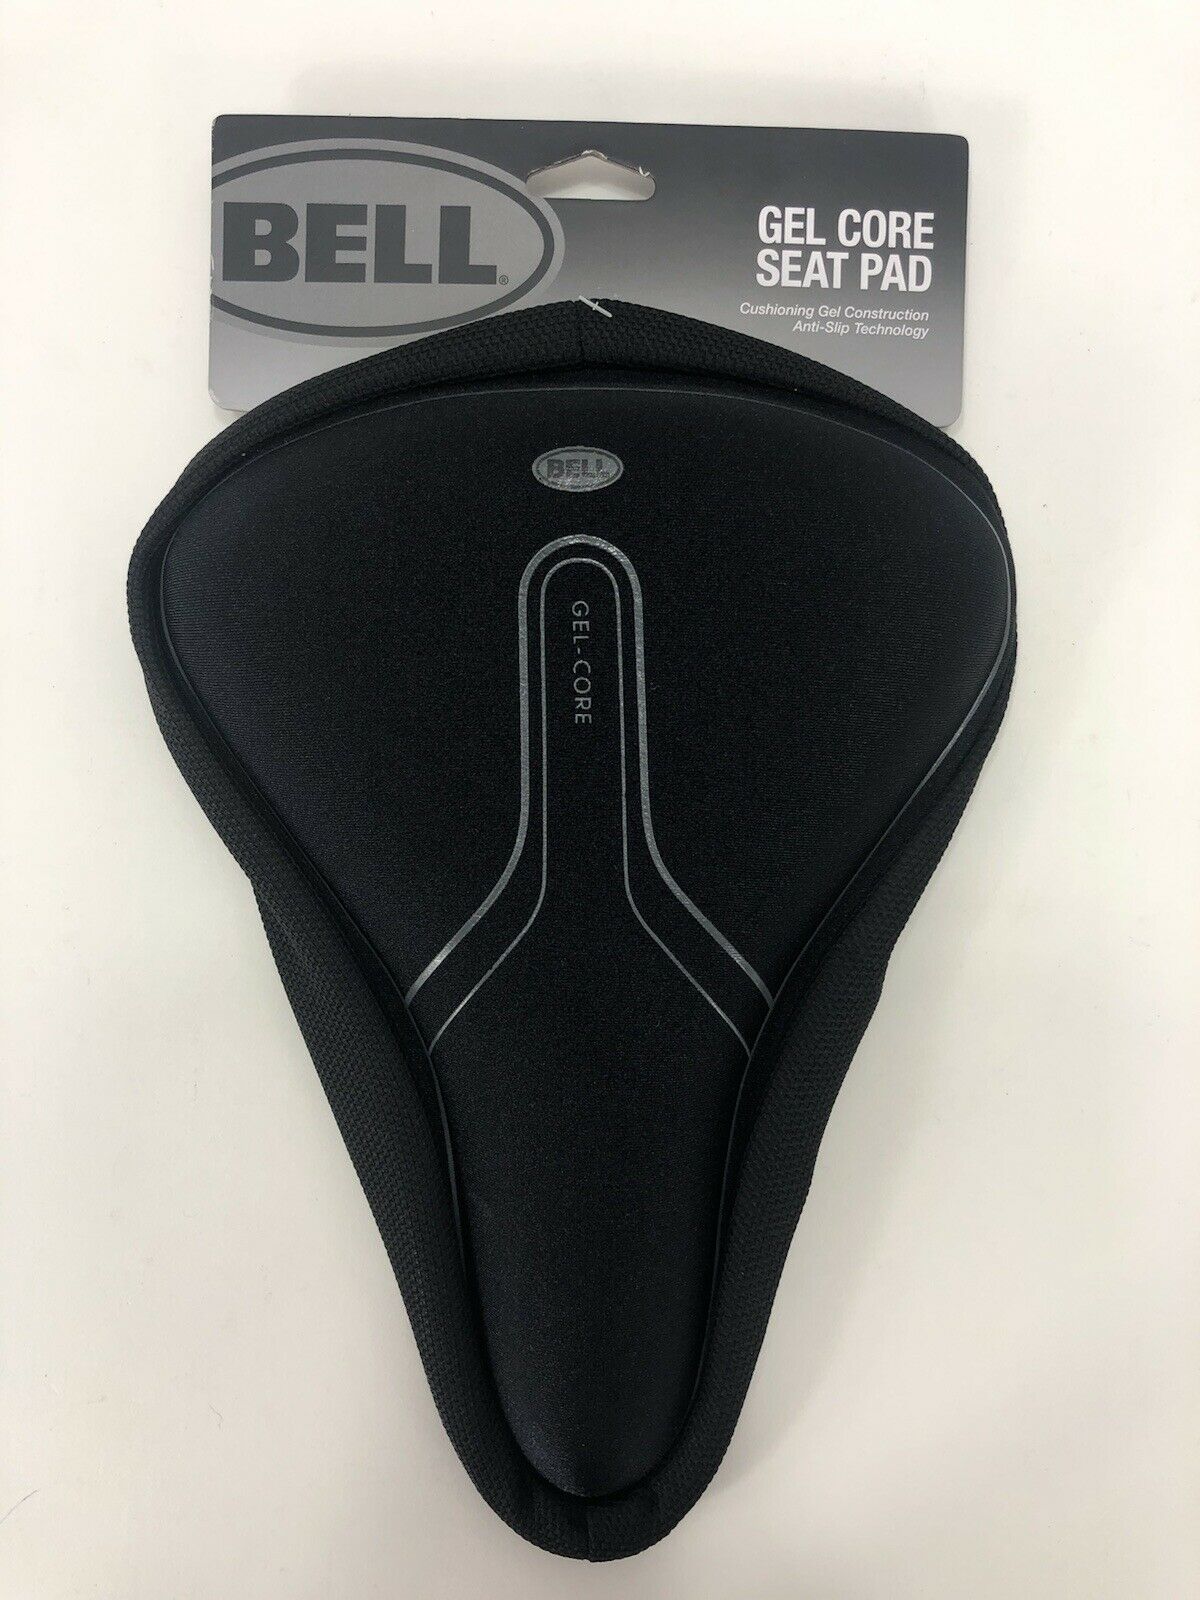 Bell Gel Core Bicycle Seat Pad Cushioning Anti-slip